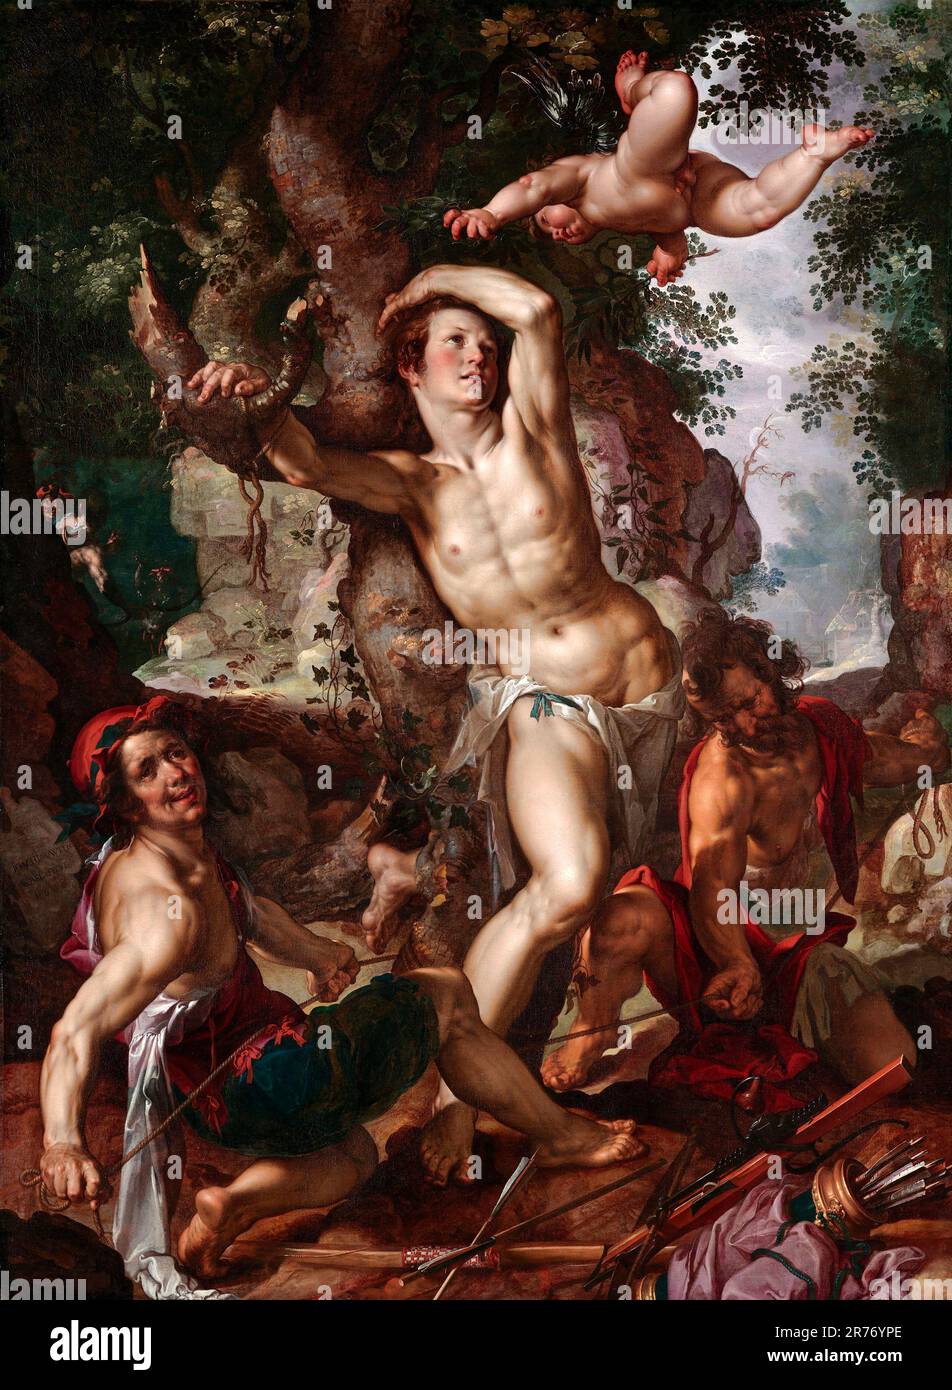 Joachim Wtewael. The Martyrdom of Saint Sebastian by Joachim Anthoniszoon Wtewael (1566-1638), oil on canvas, 1600 Stock Photo